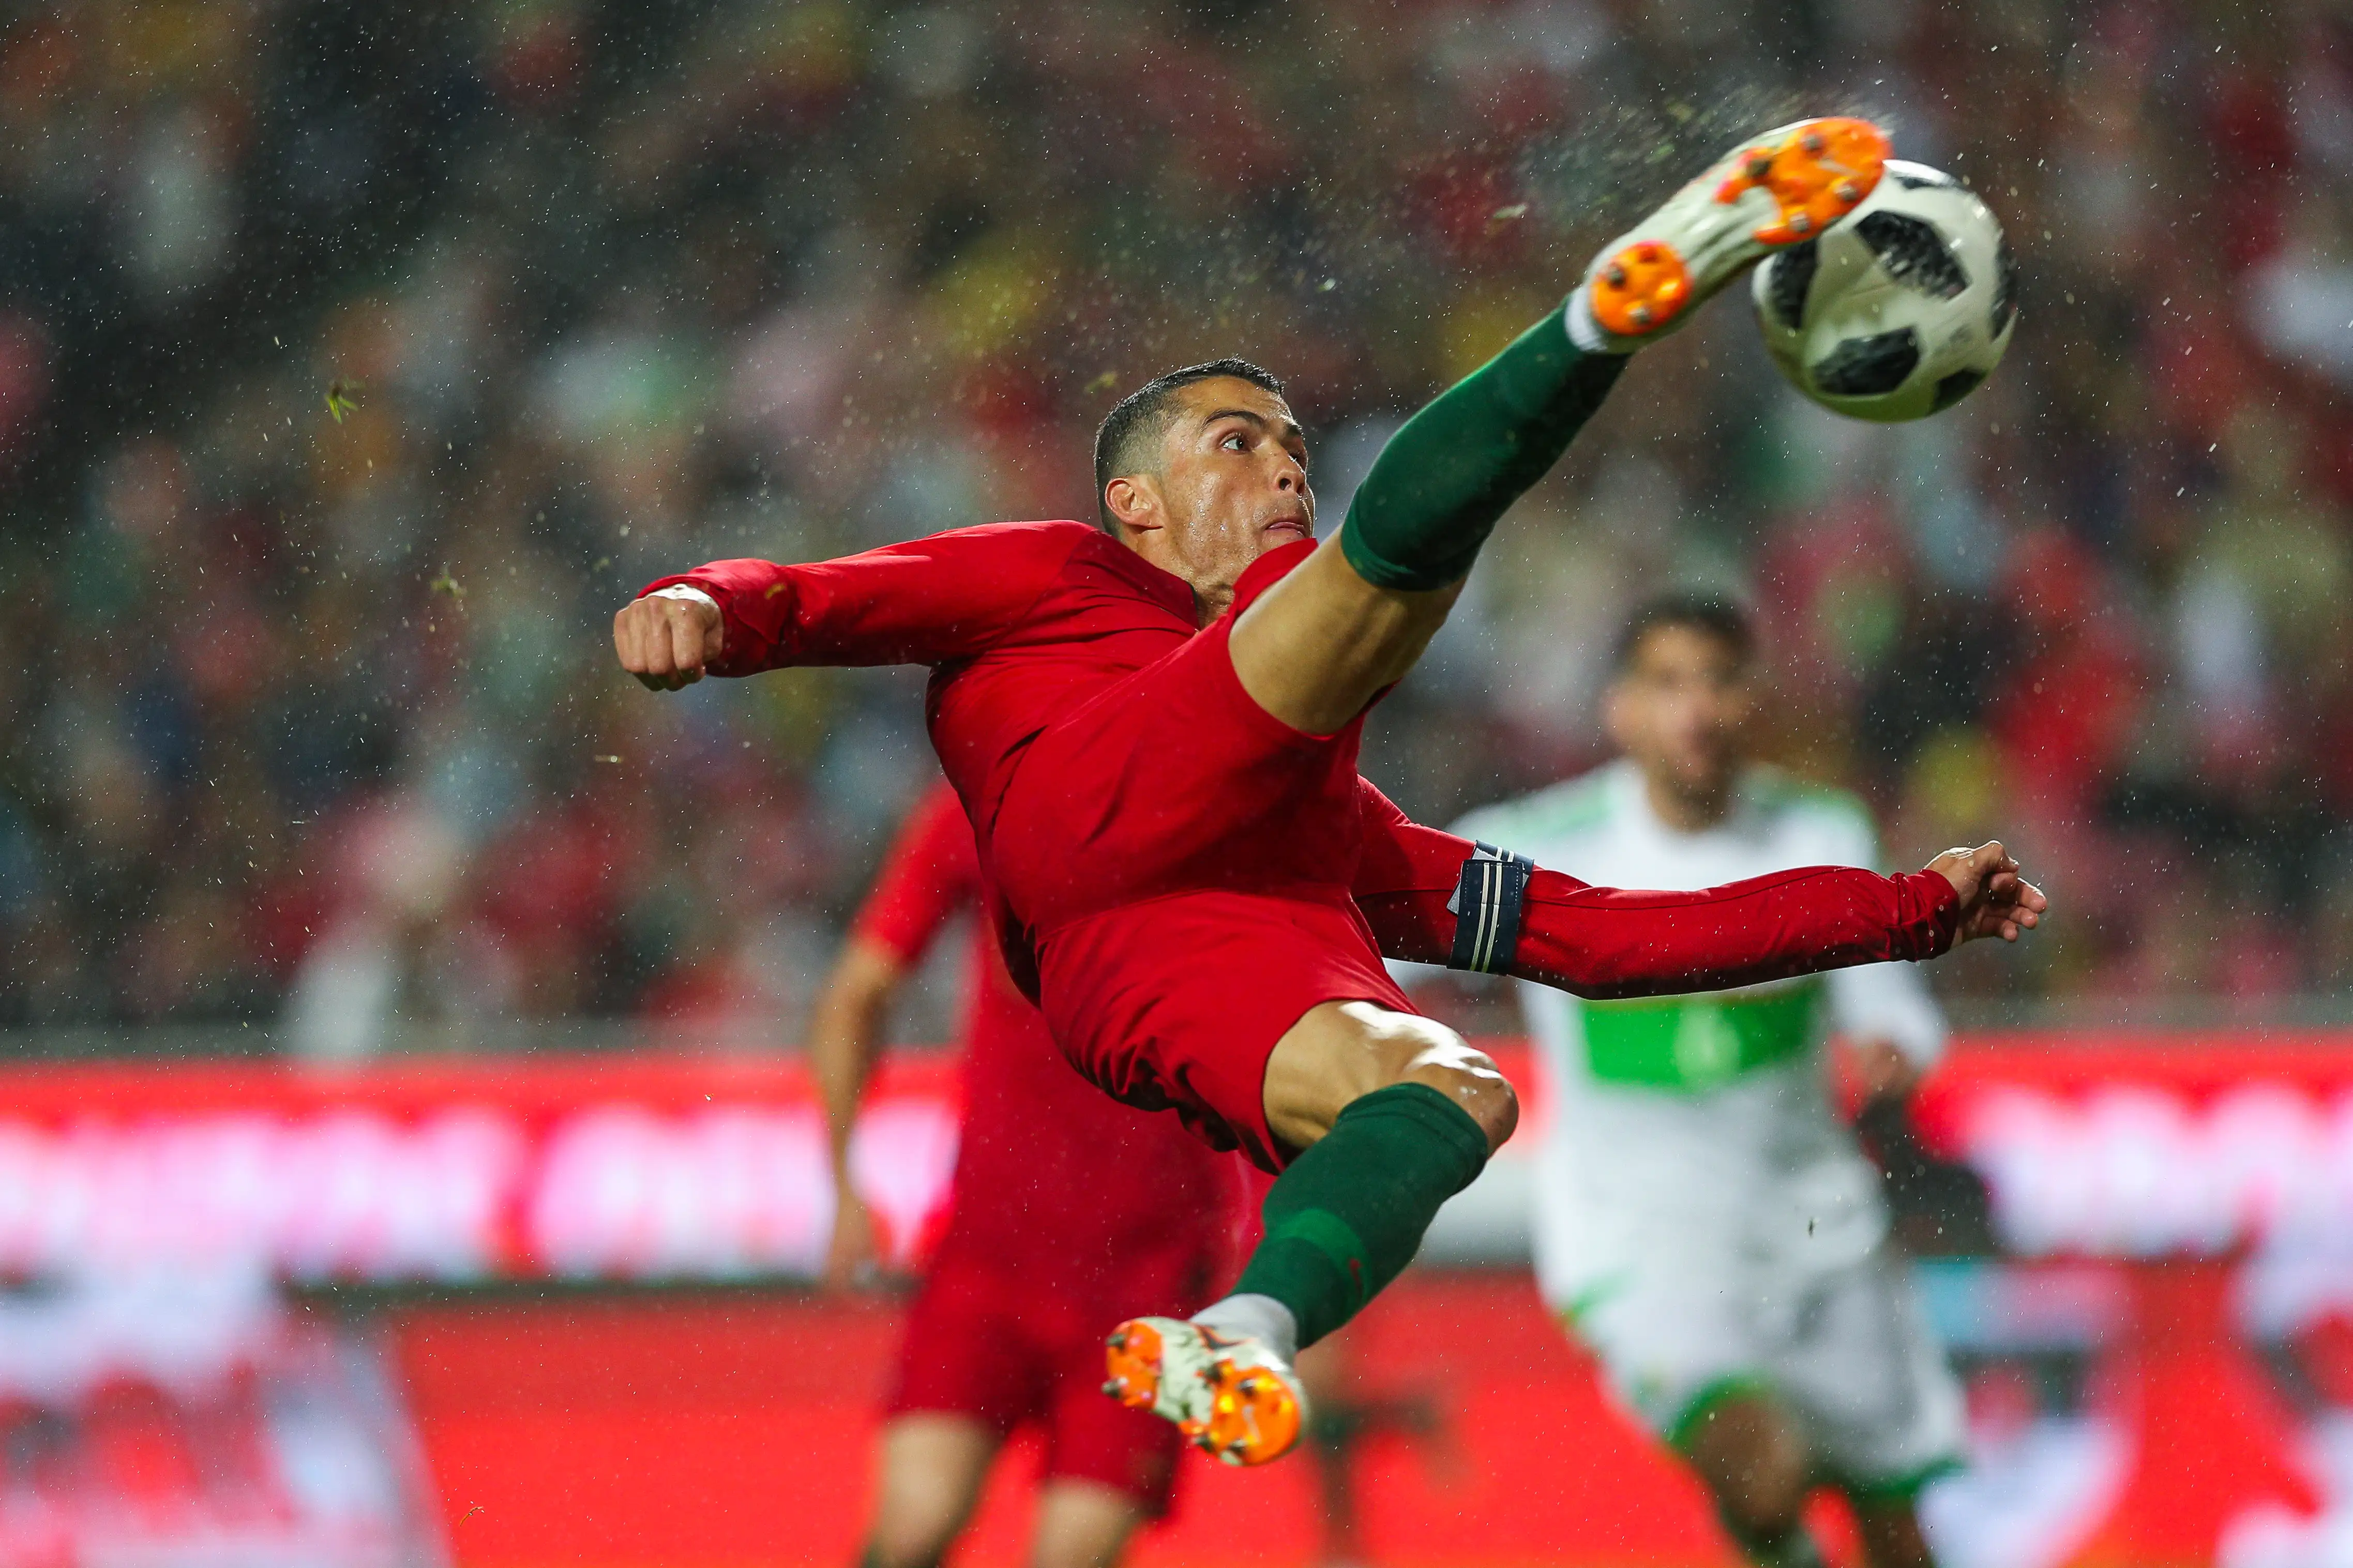 Cristiano Ronaldo kicking soccer ball